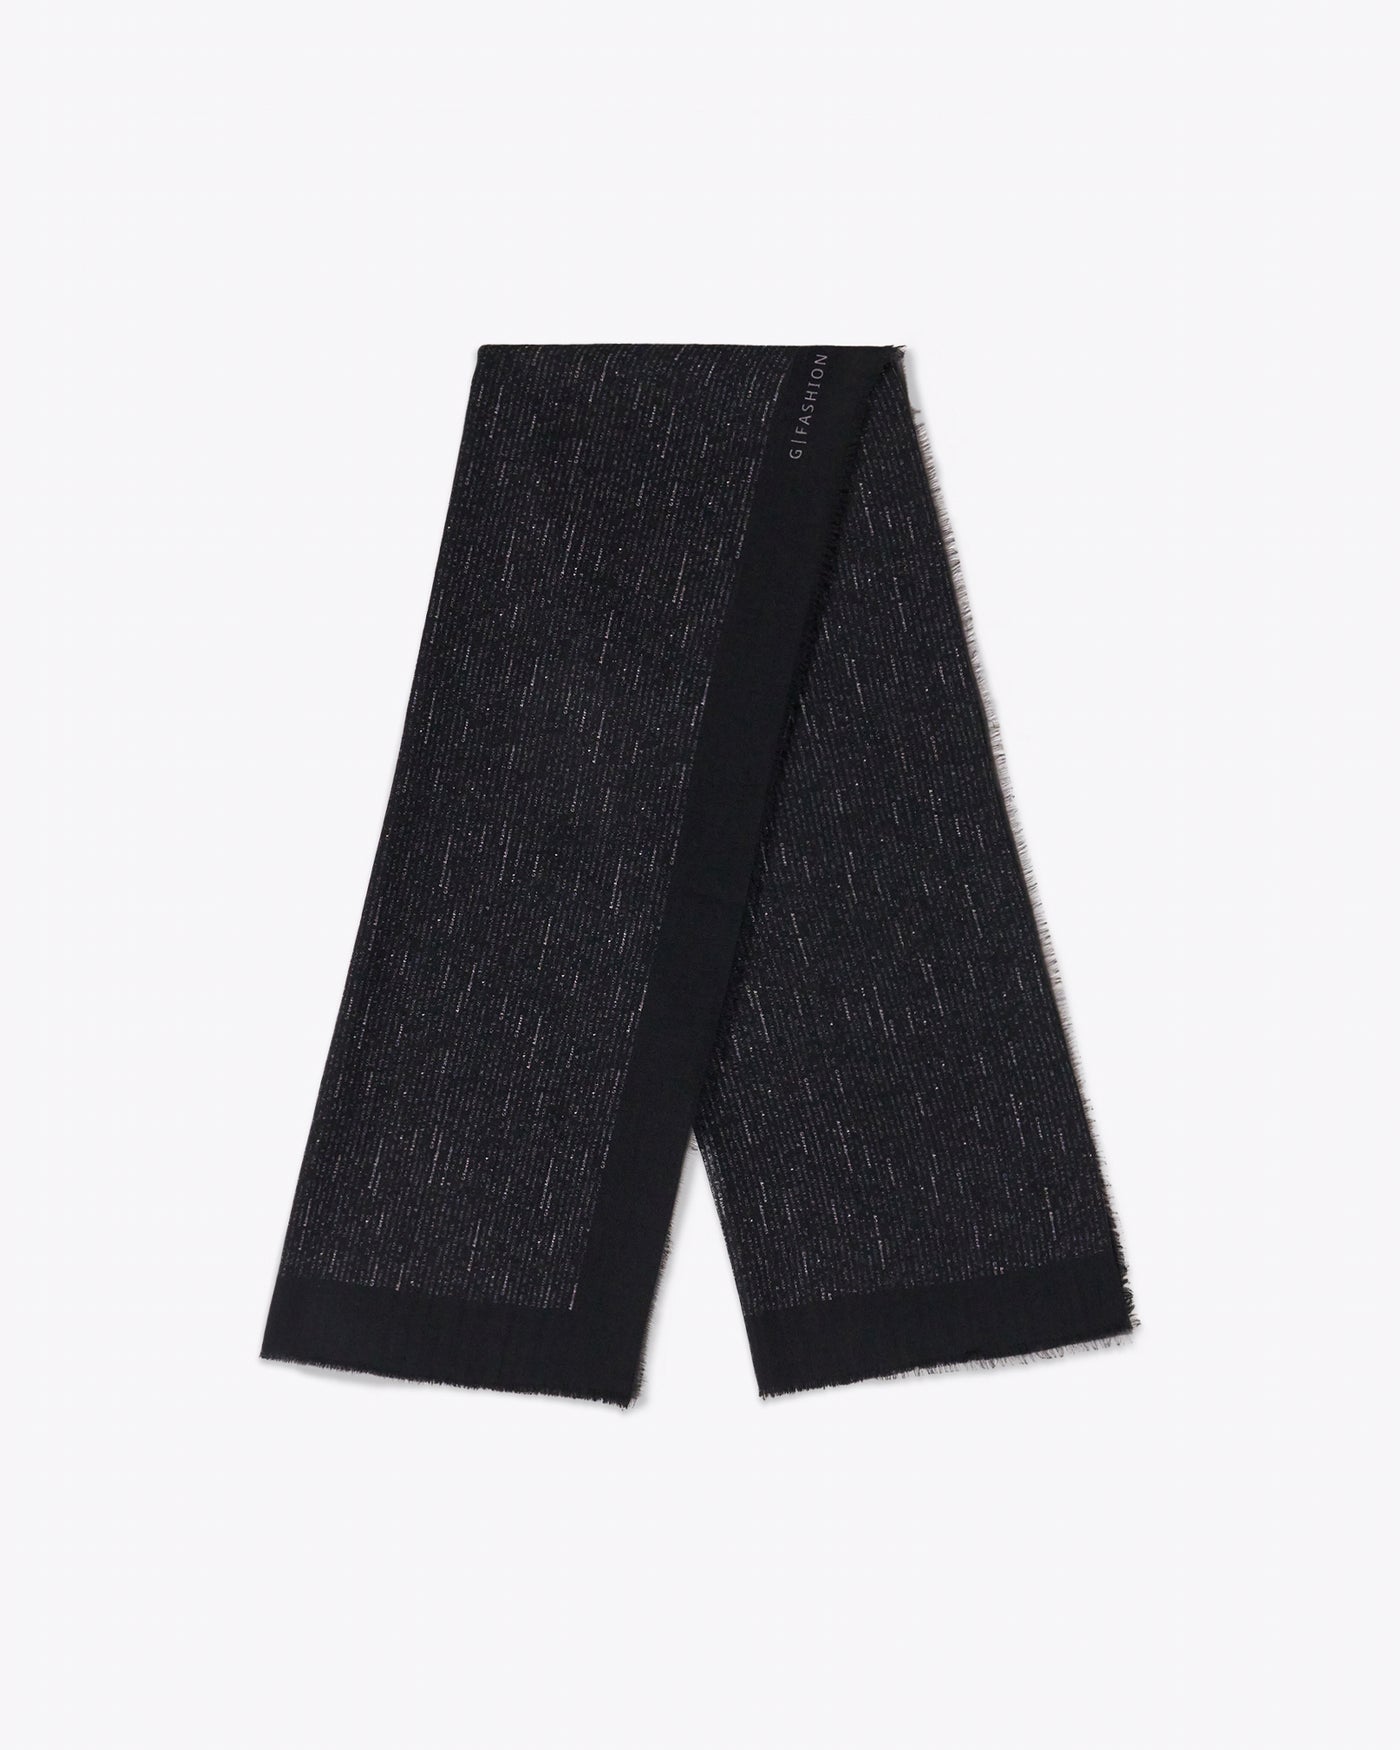 Black cashmere rectangle